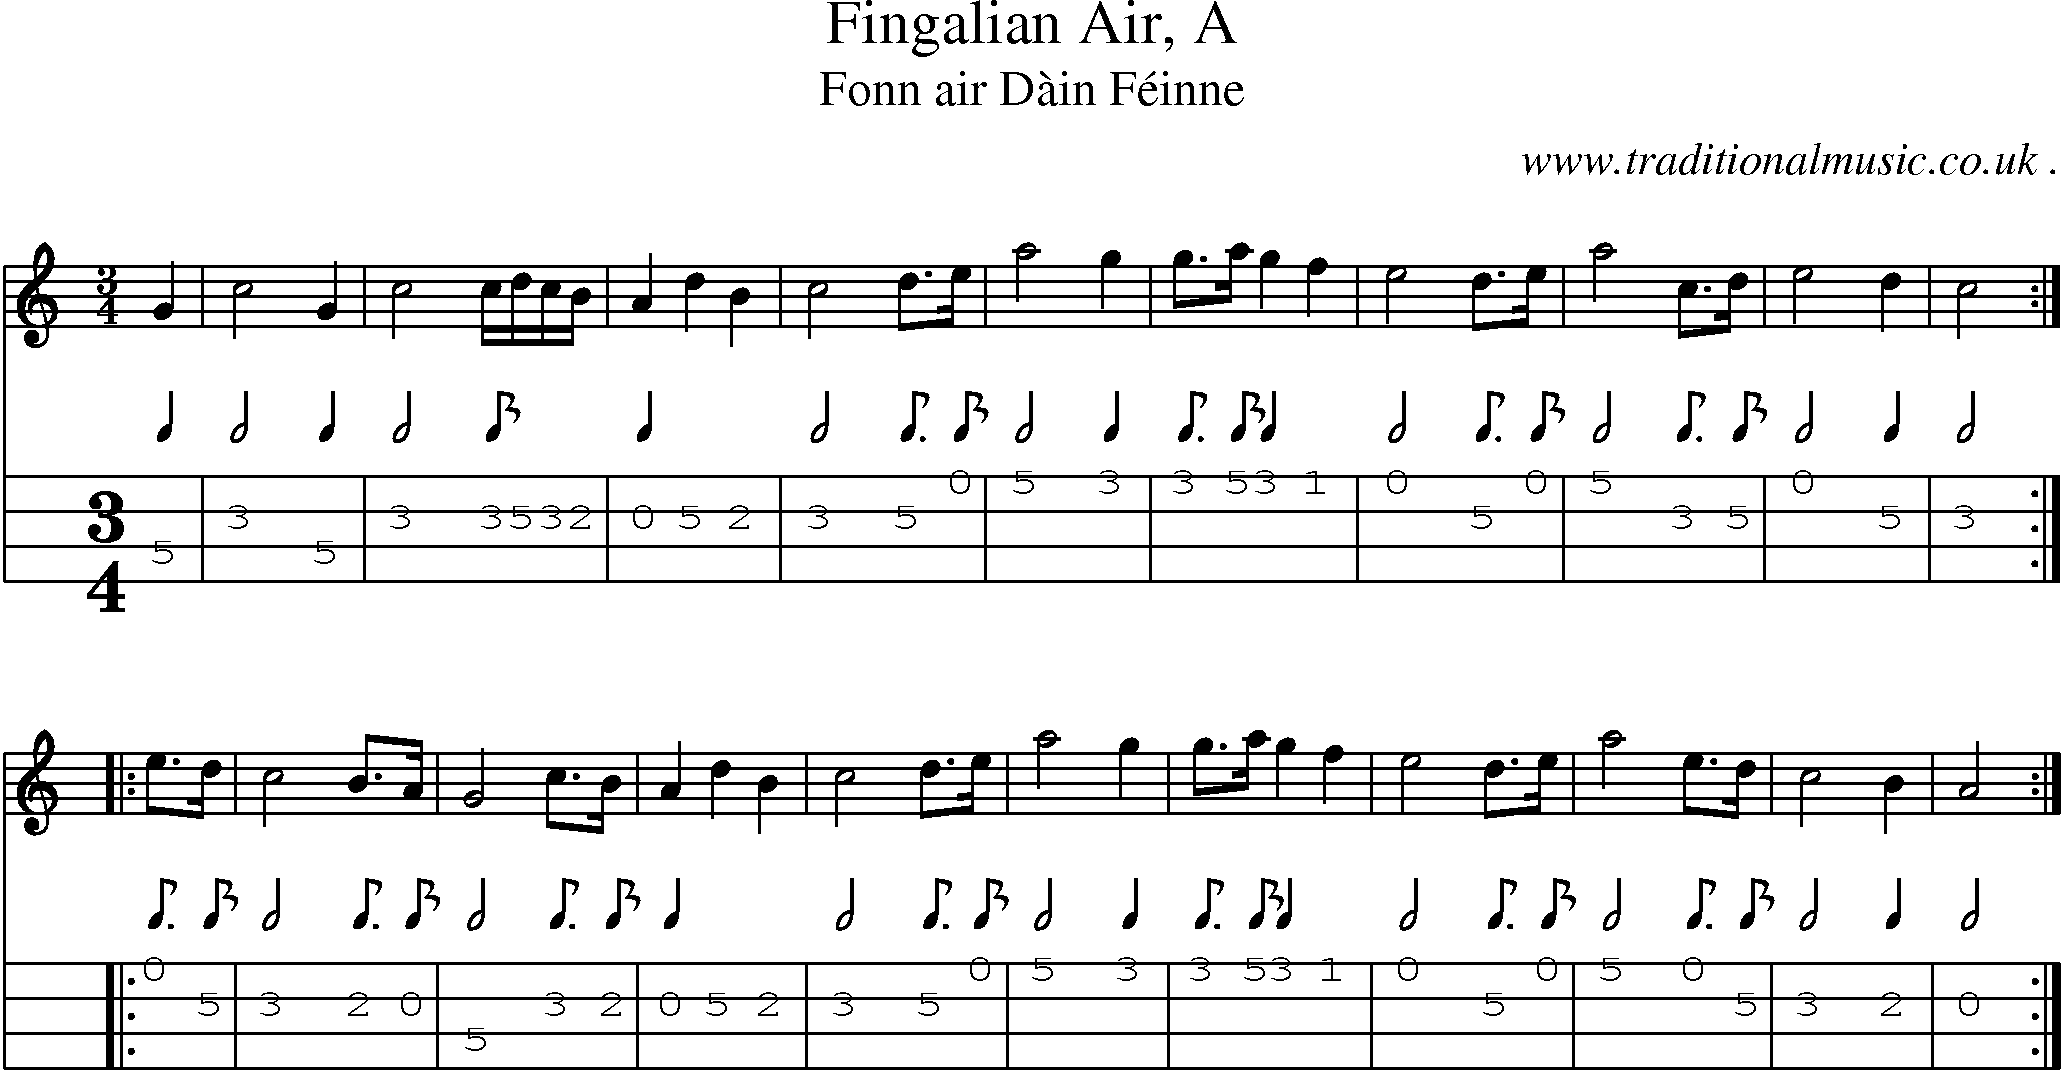 Sheet-music  score, Chords and Mandolin Tabs for Fingalian Air A